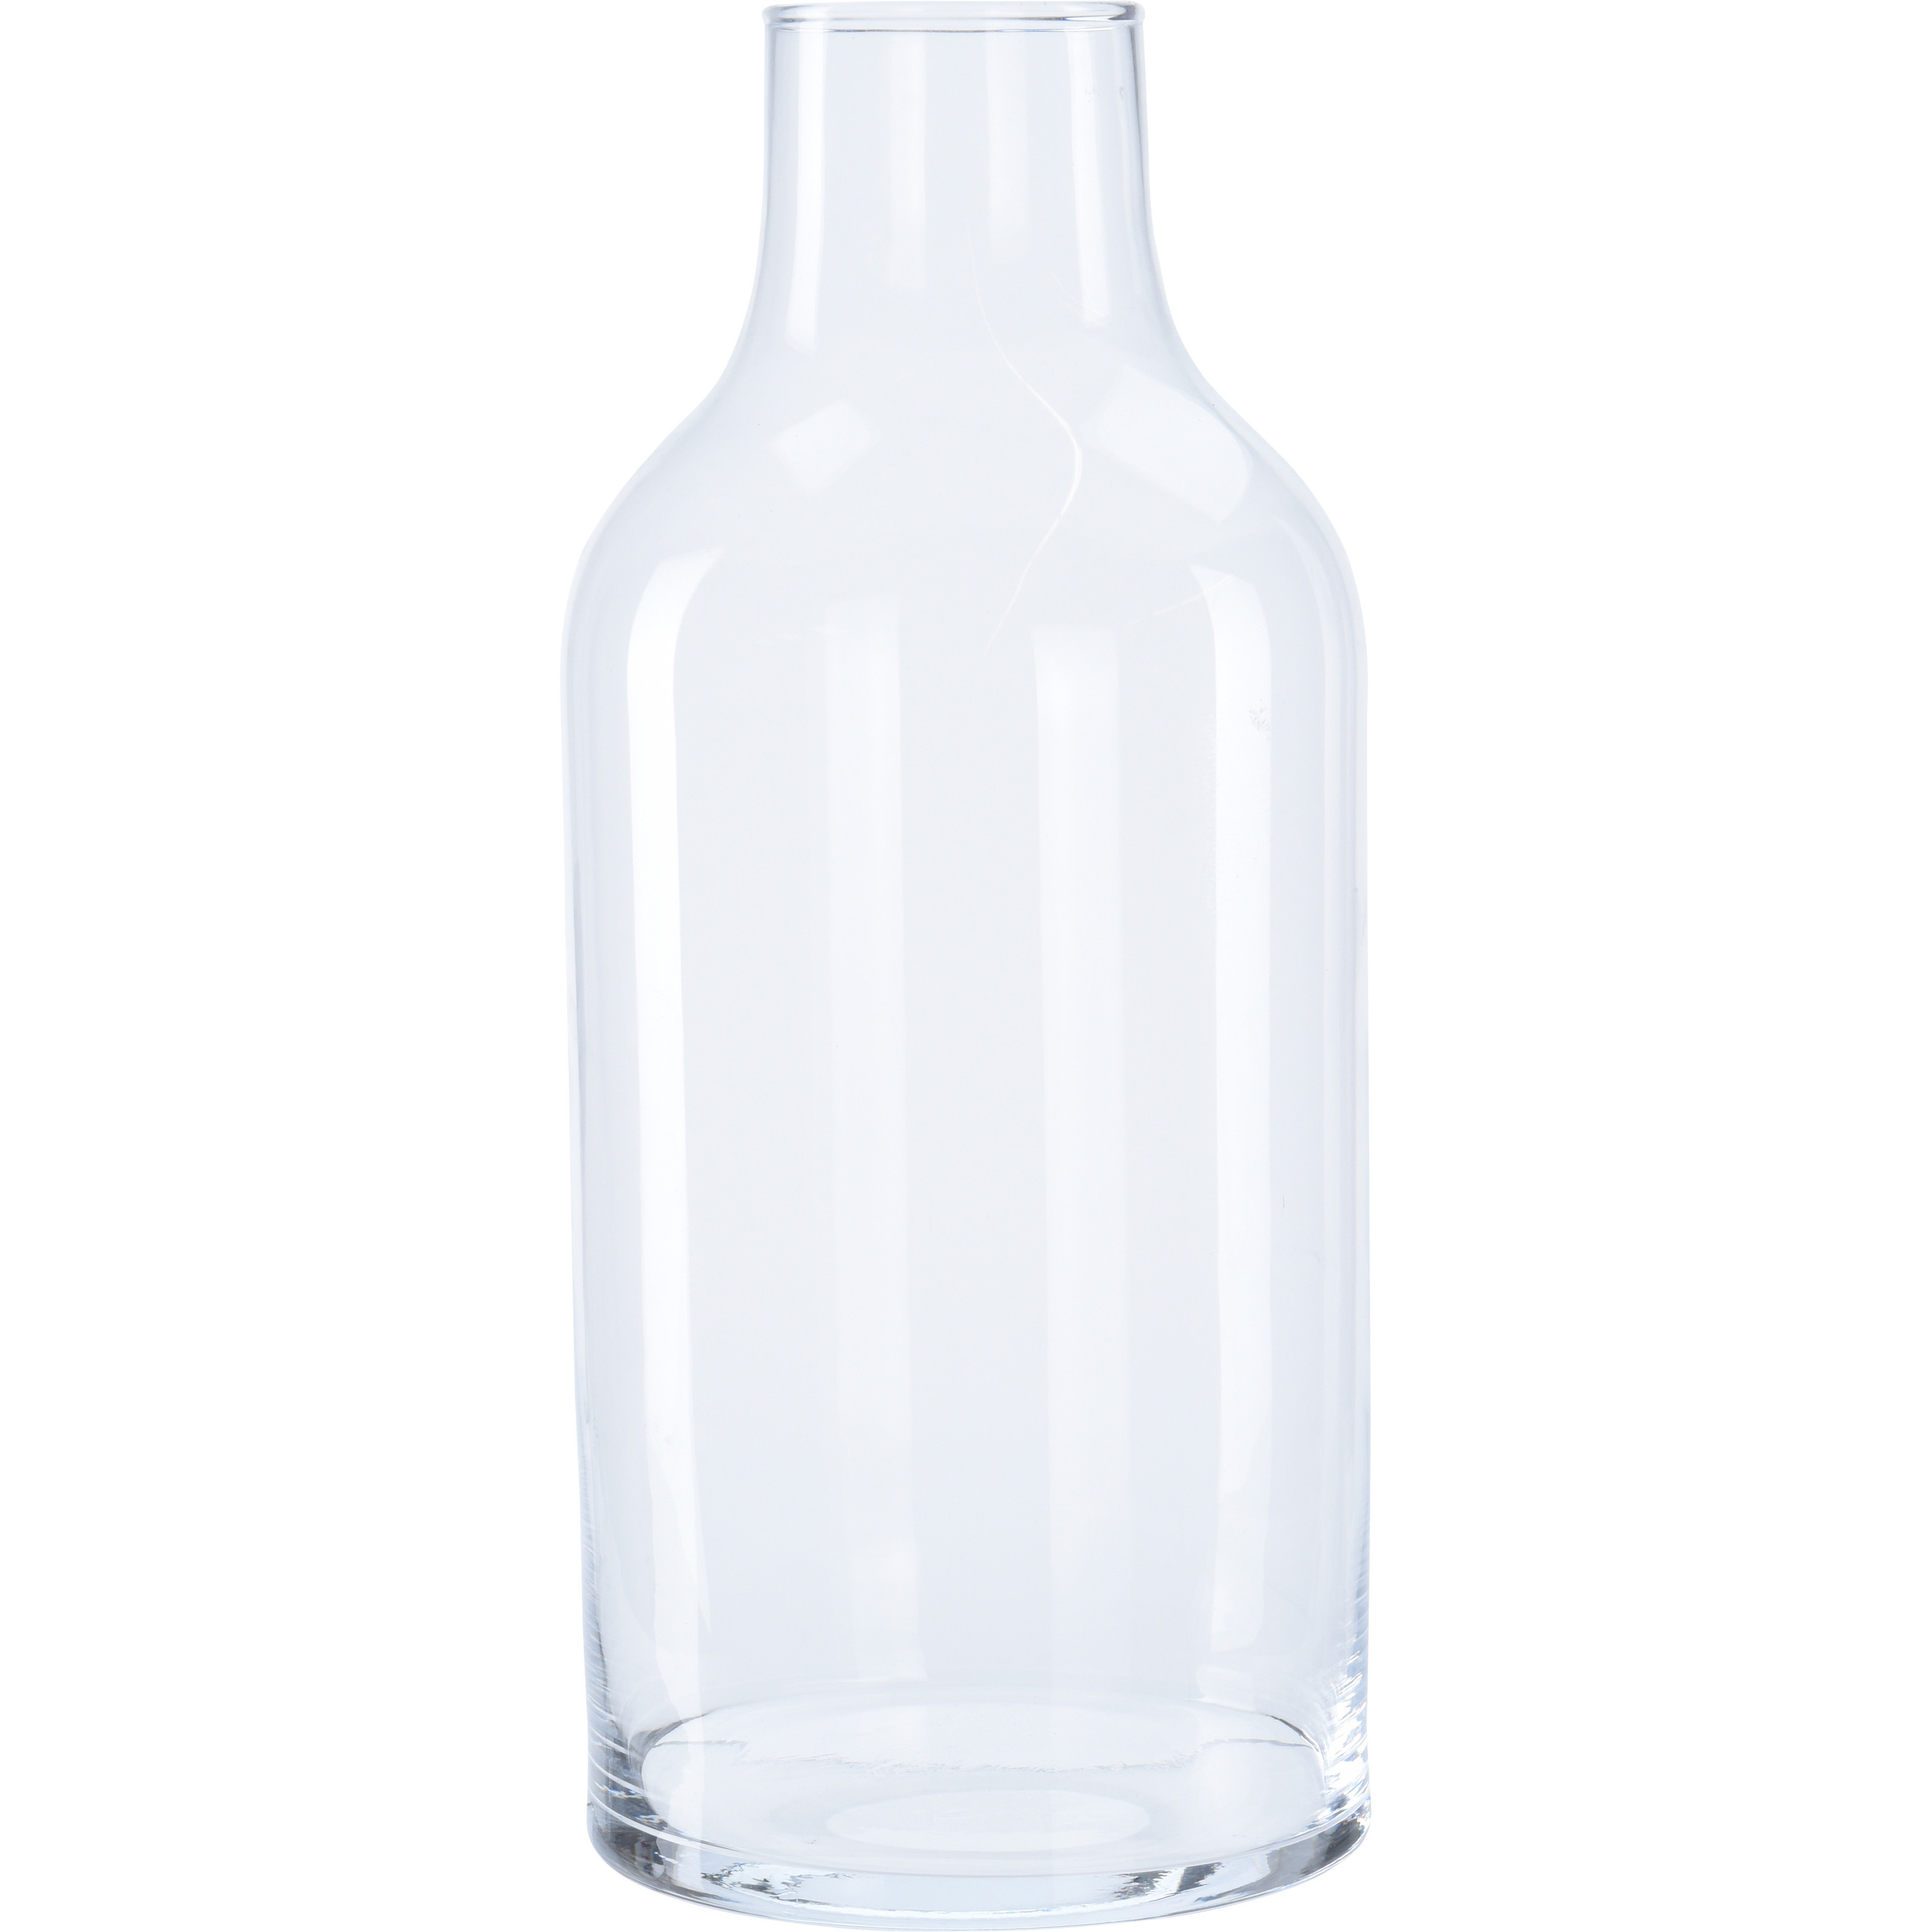 1x Glazen fles vaas/vazen 13,5 x 30 cm transparant 3300 ml